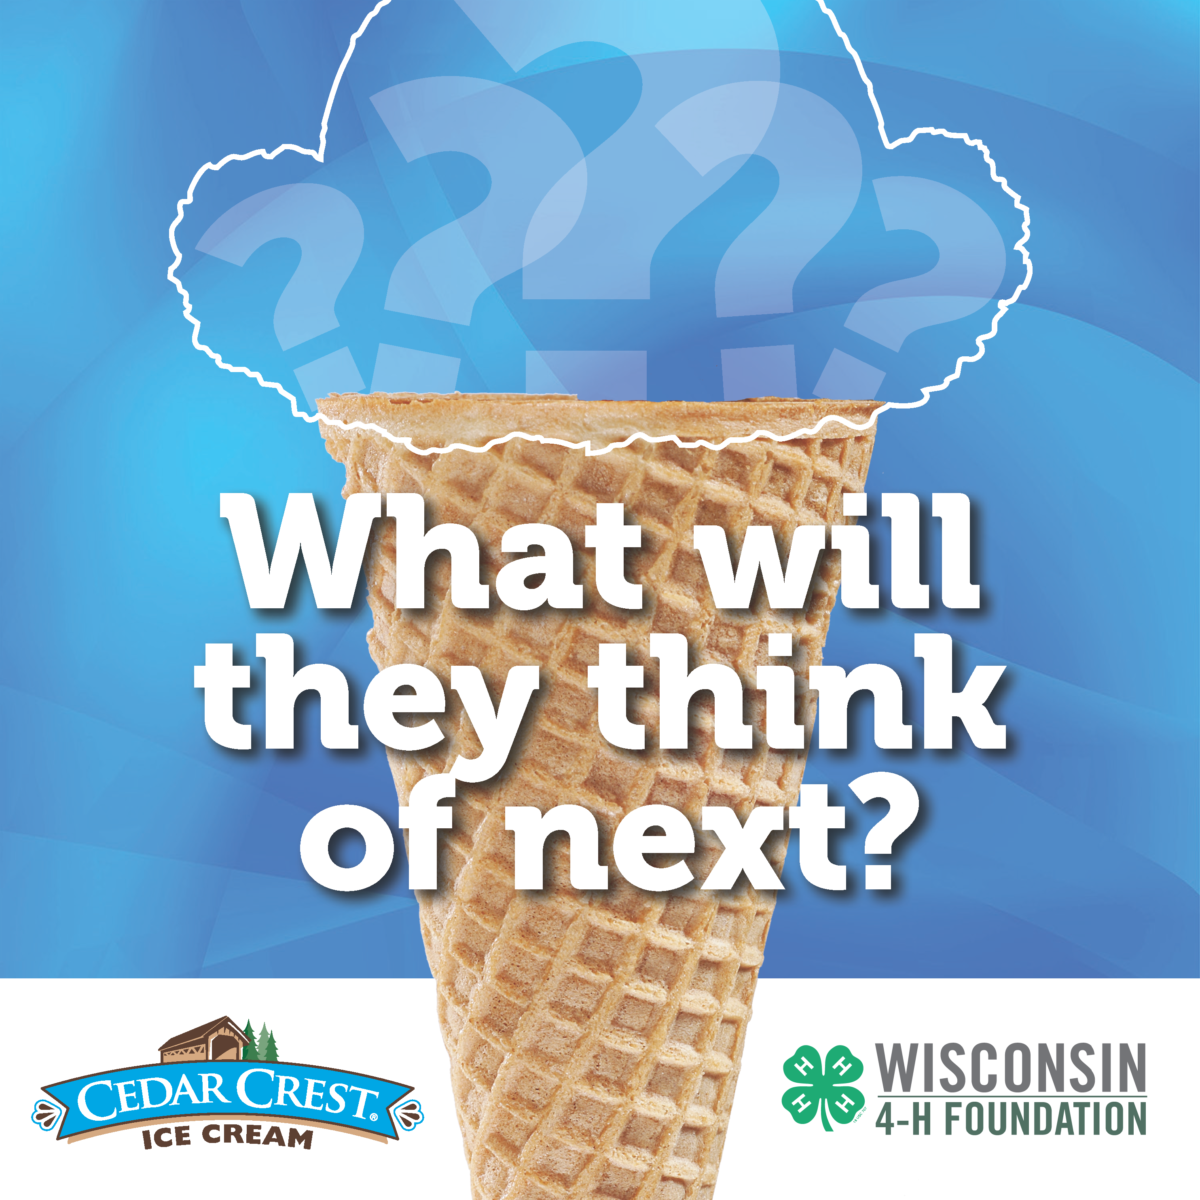 Cedar Crest Ice Cream, Wisconsin 4H Foundation team up for Flavor